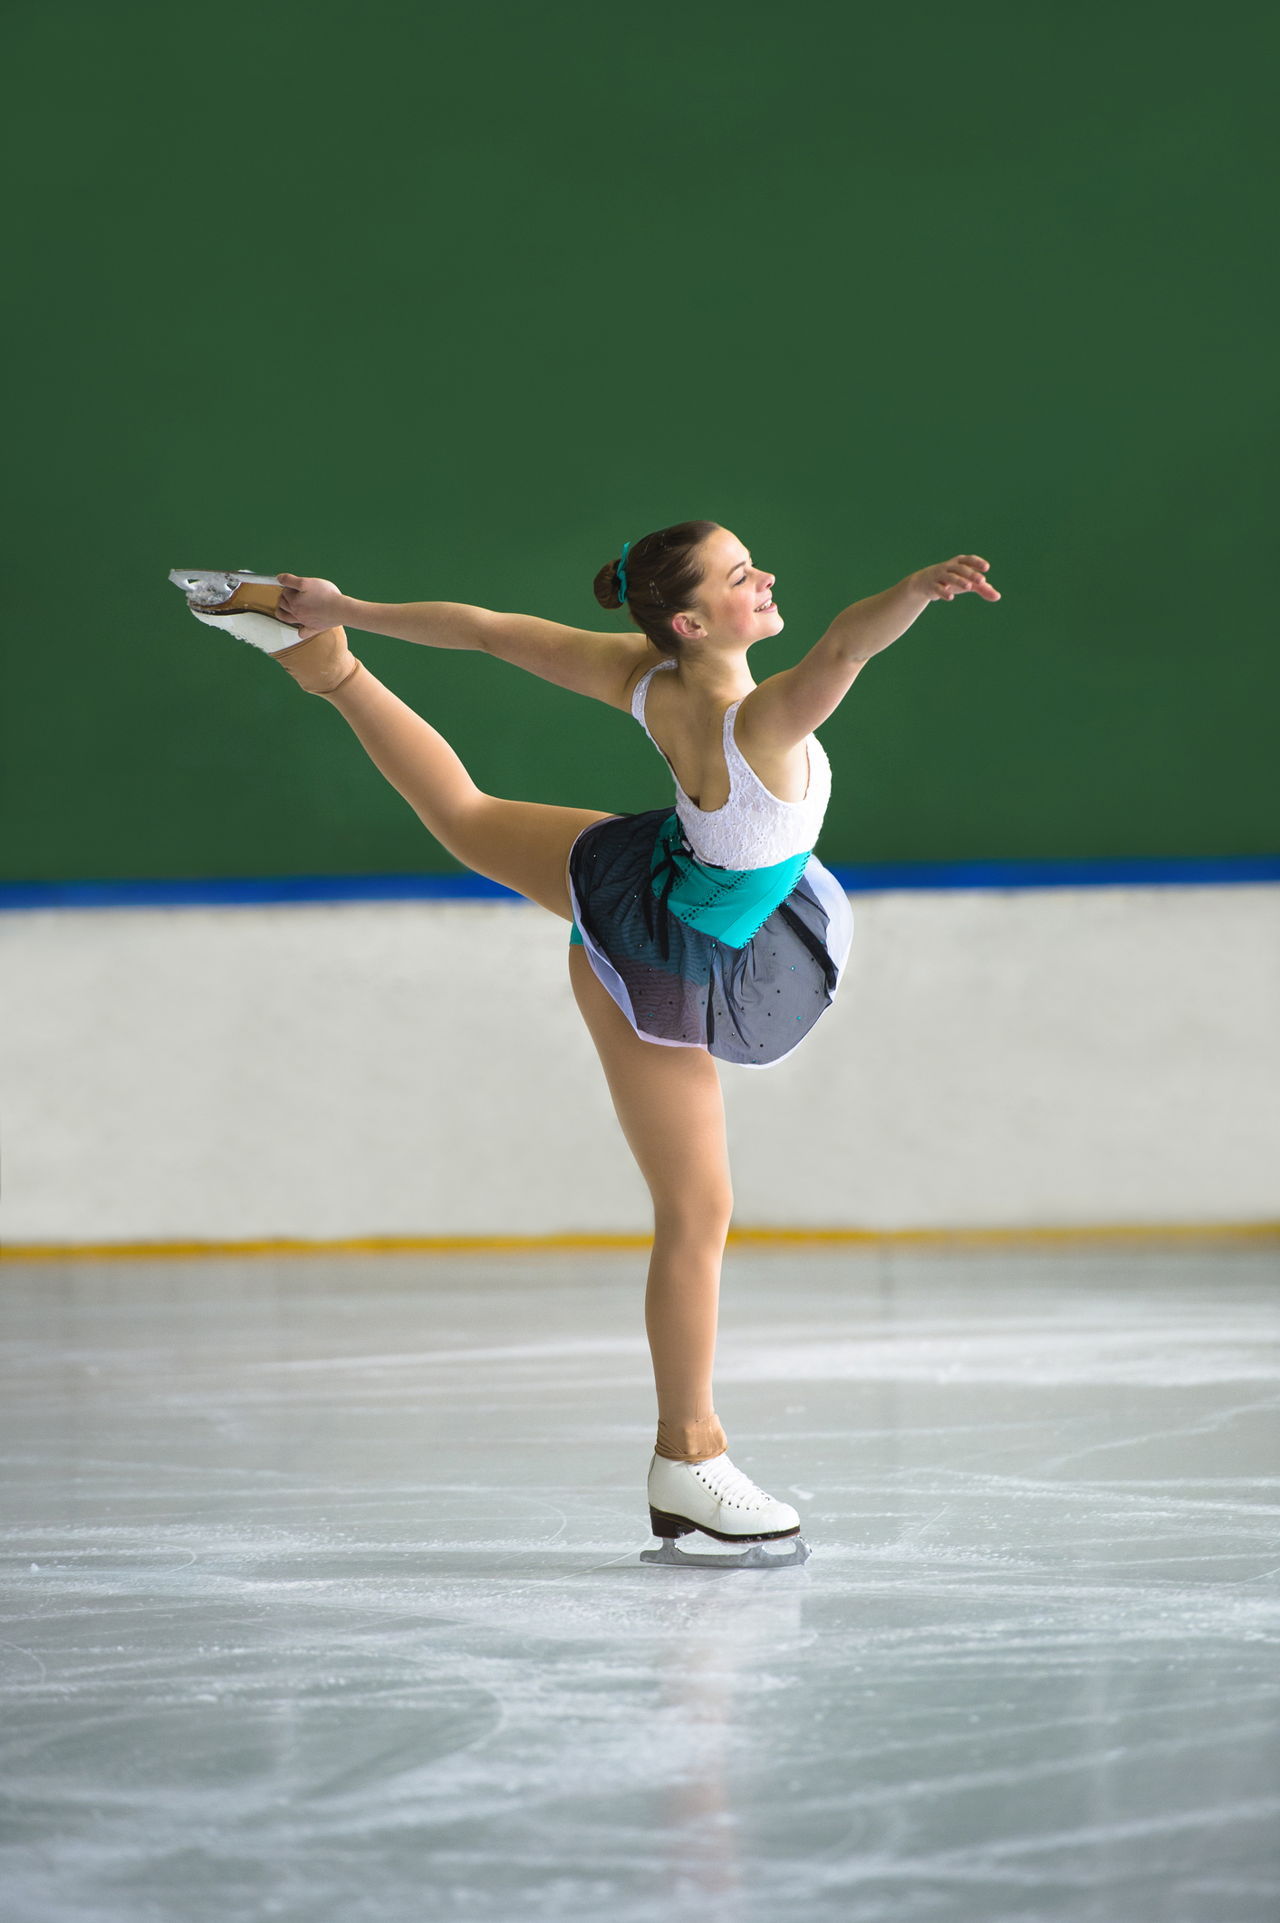 https://pixfeeds.com/images/adventure/ice-skating/1280-181882452-young-women-figure-skating.jpg